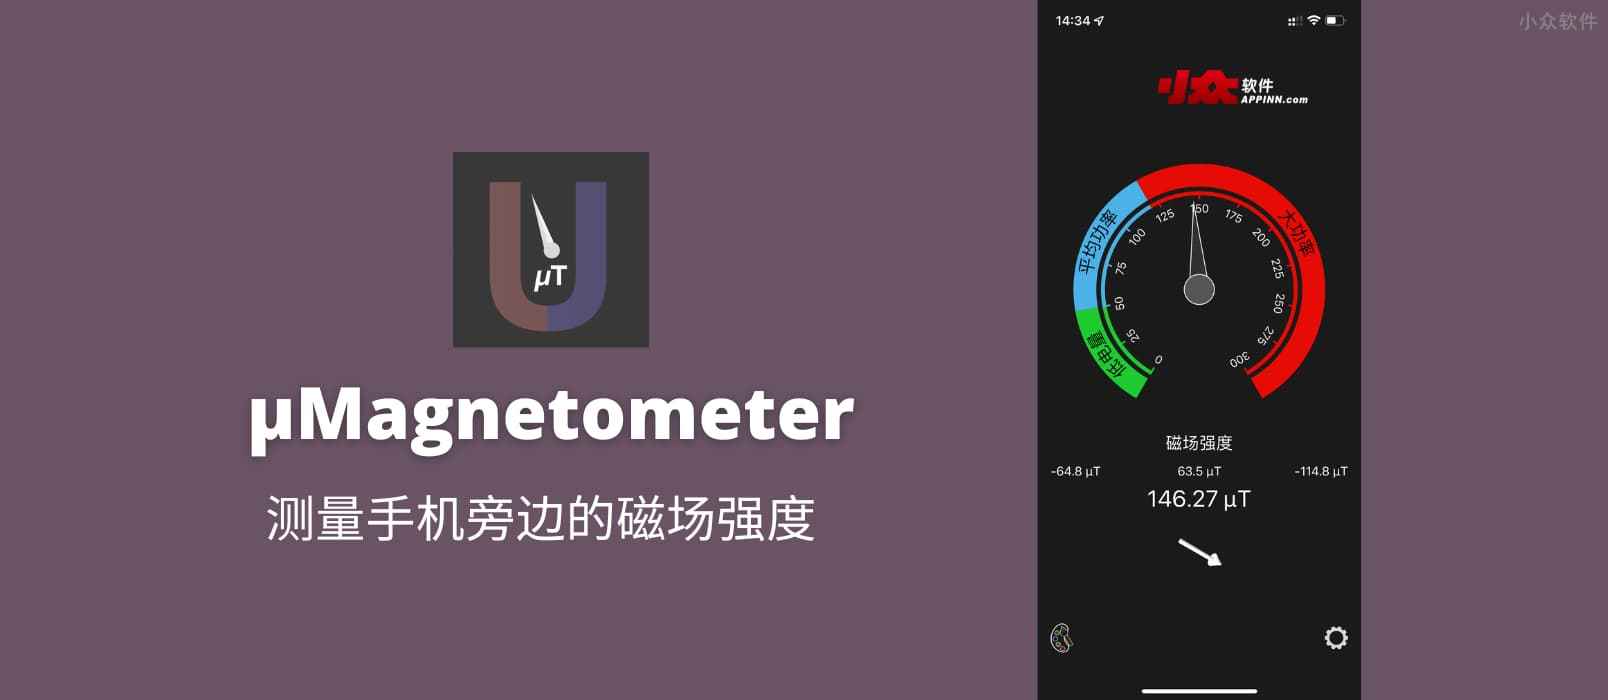 µMagnetometer – 磁力计，测量手机旁边的磁场强度[iPhone]